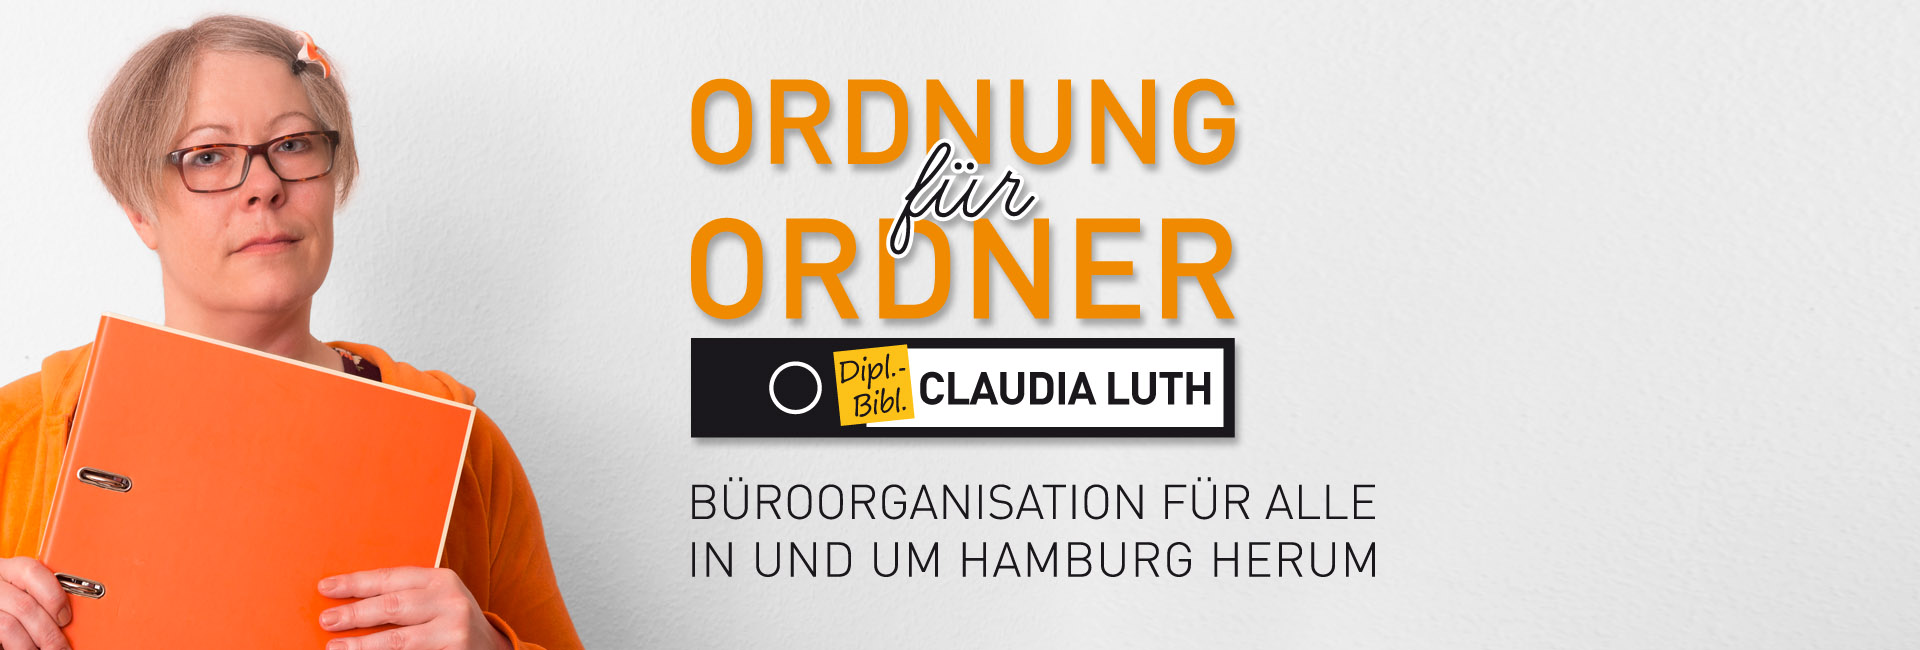 Claudia Luth - Ordnung für Ordner